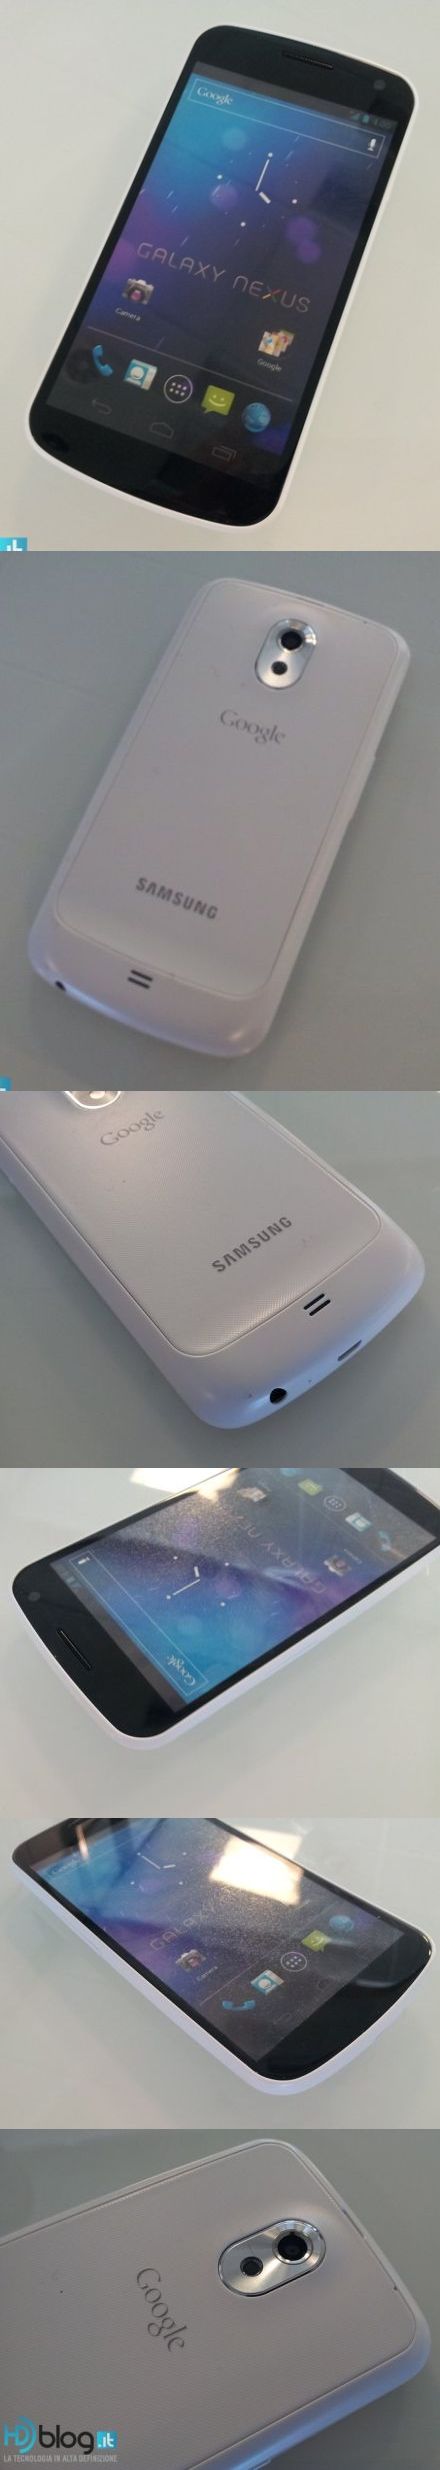 Képeken a hófehér Galaxy Nexus